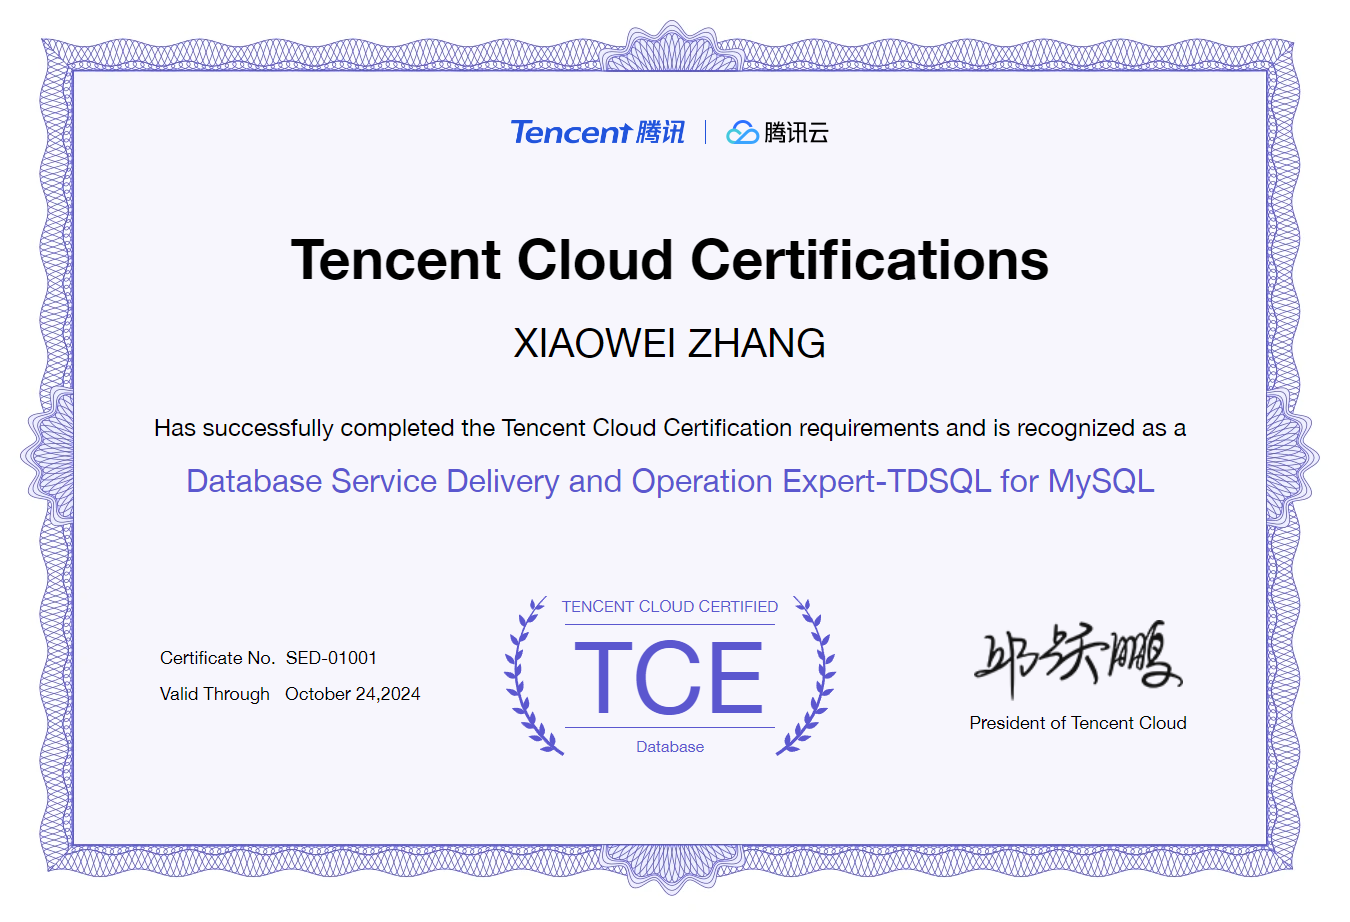 TDSQL For MySQL高级TCCE认证证书